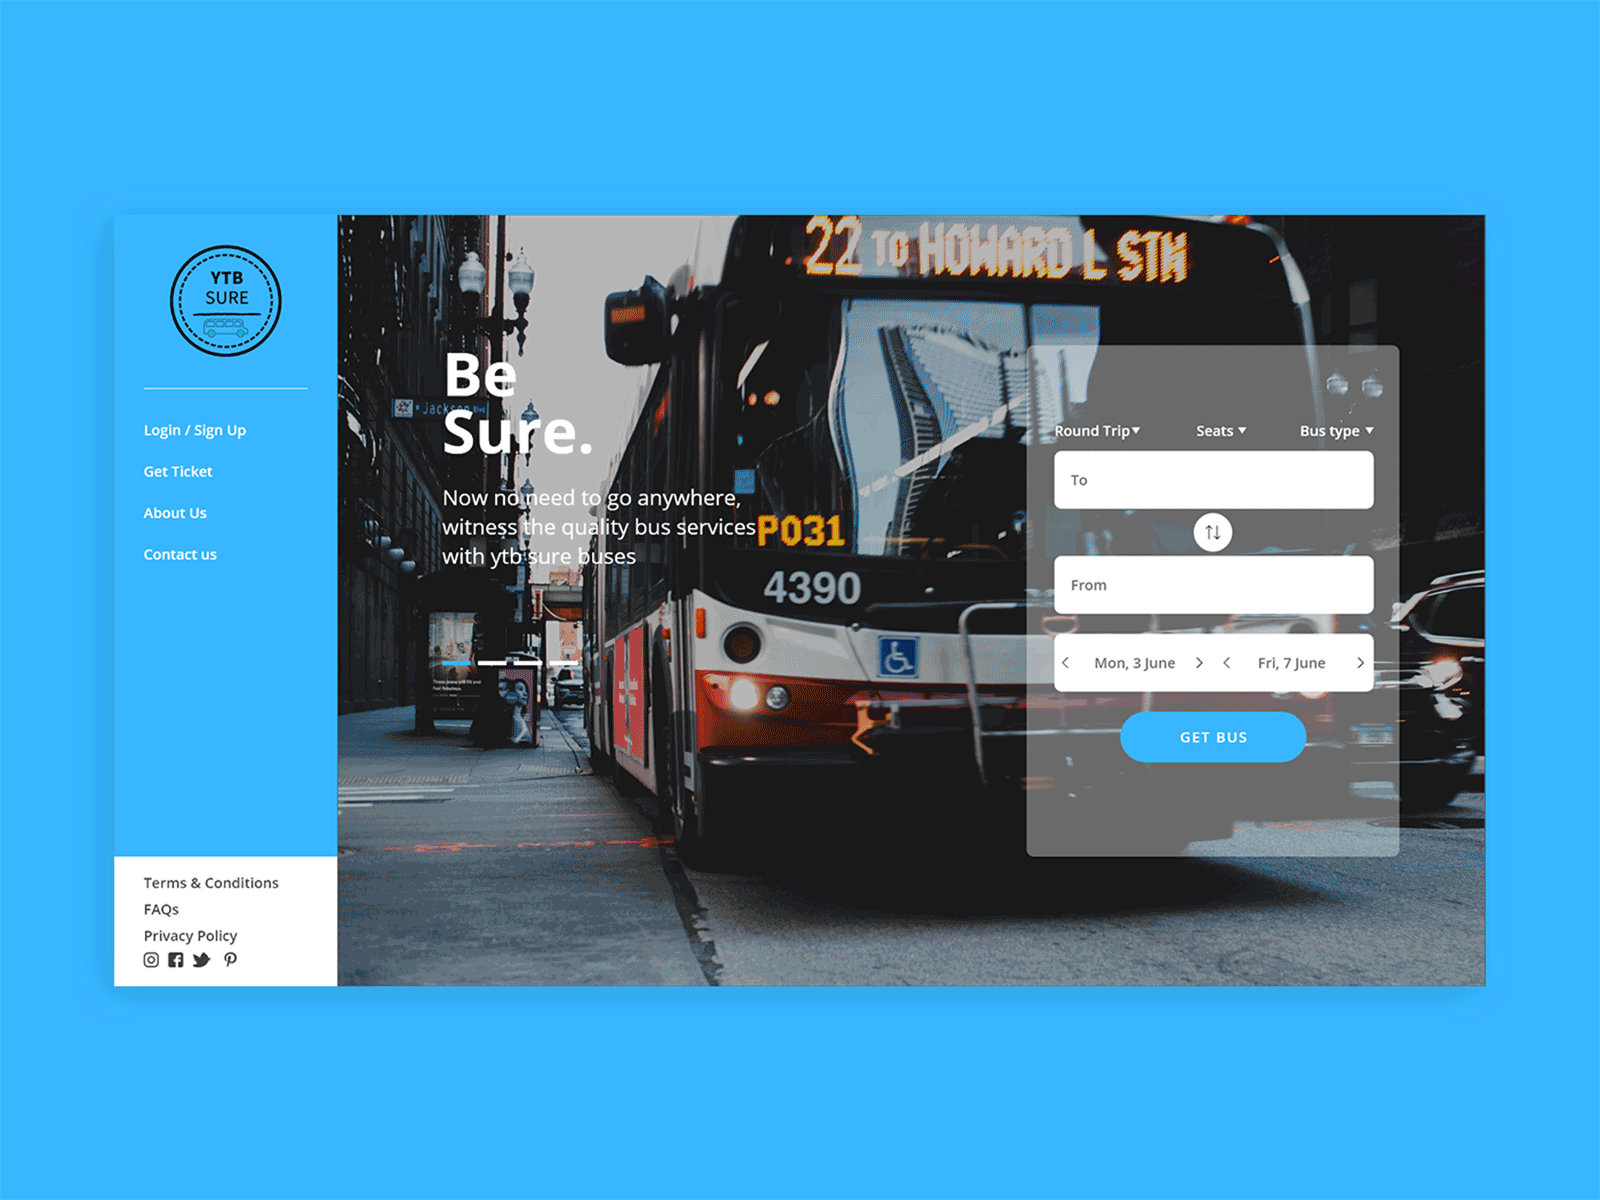 Bus booking website design - YTB Sure by Meenakshi Bose on Dribbble